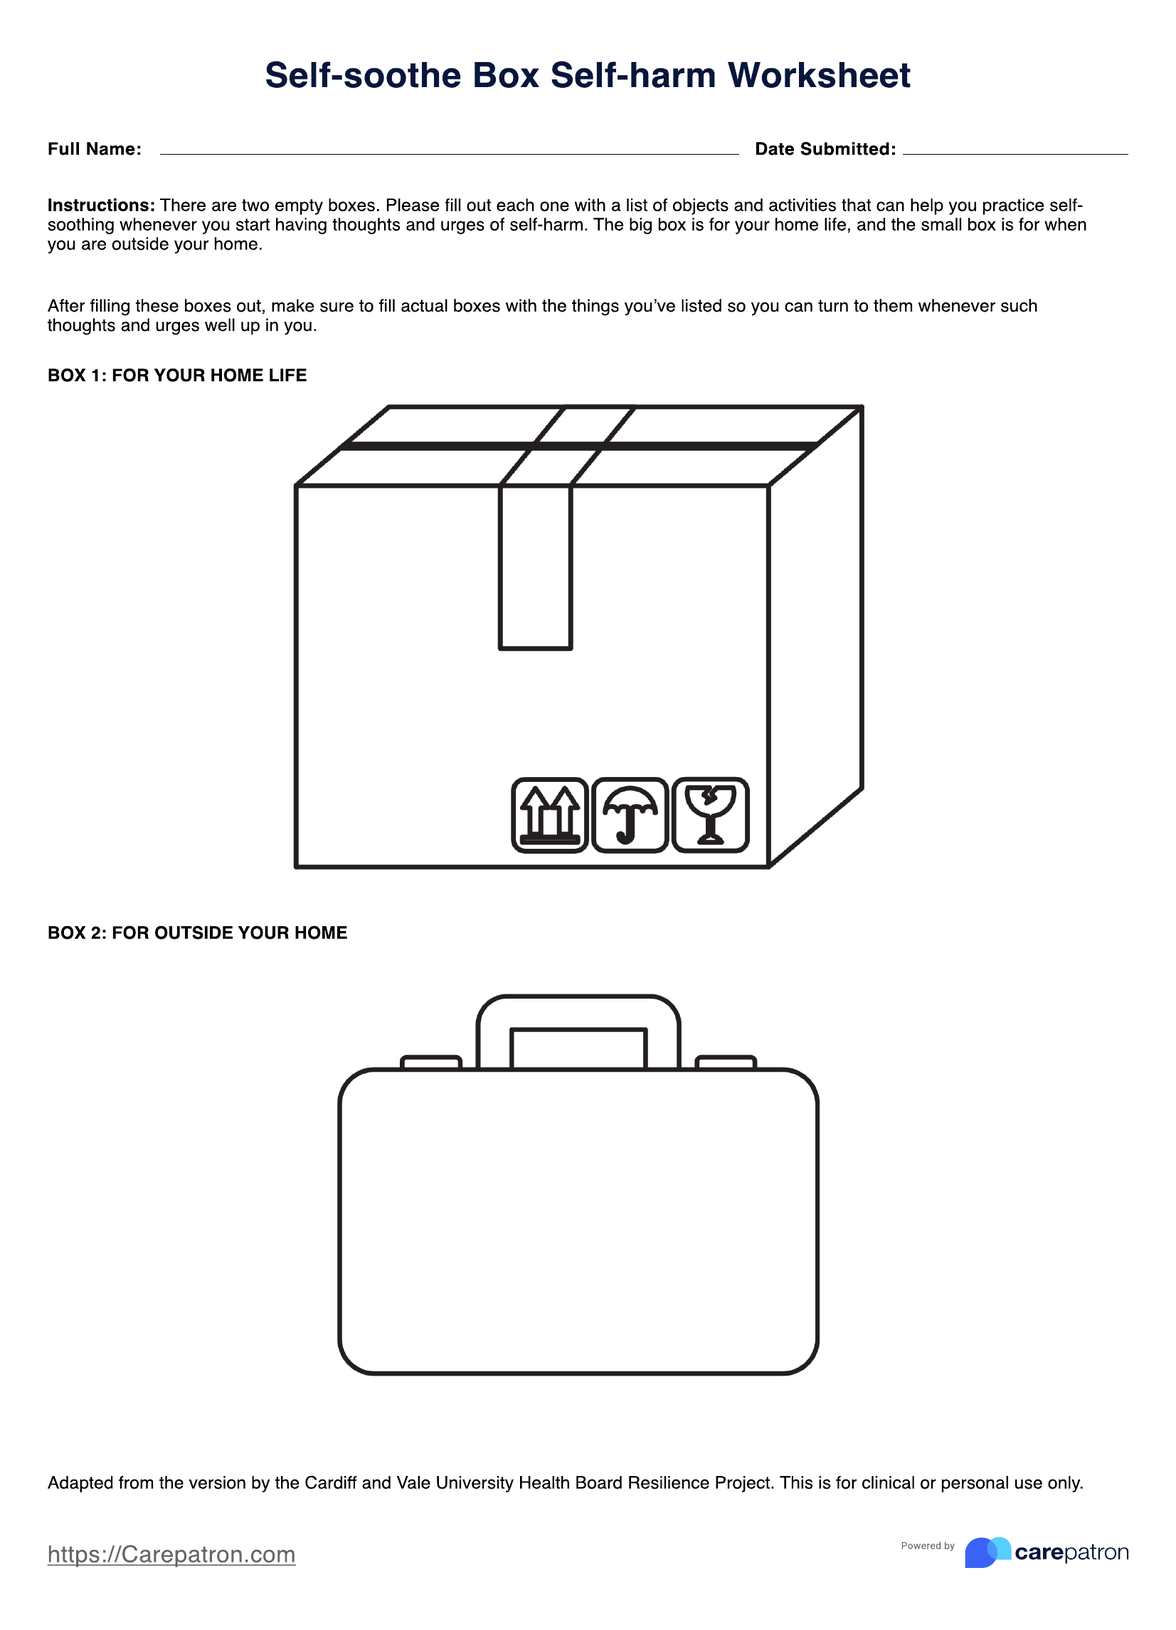 Self-soothe Box Self-harm Worksheet PDF Example